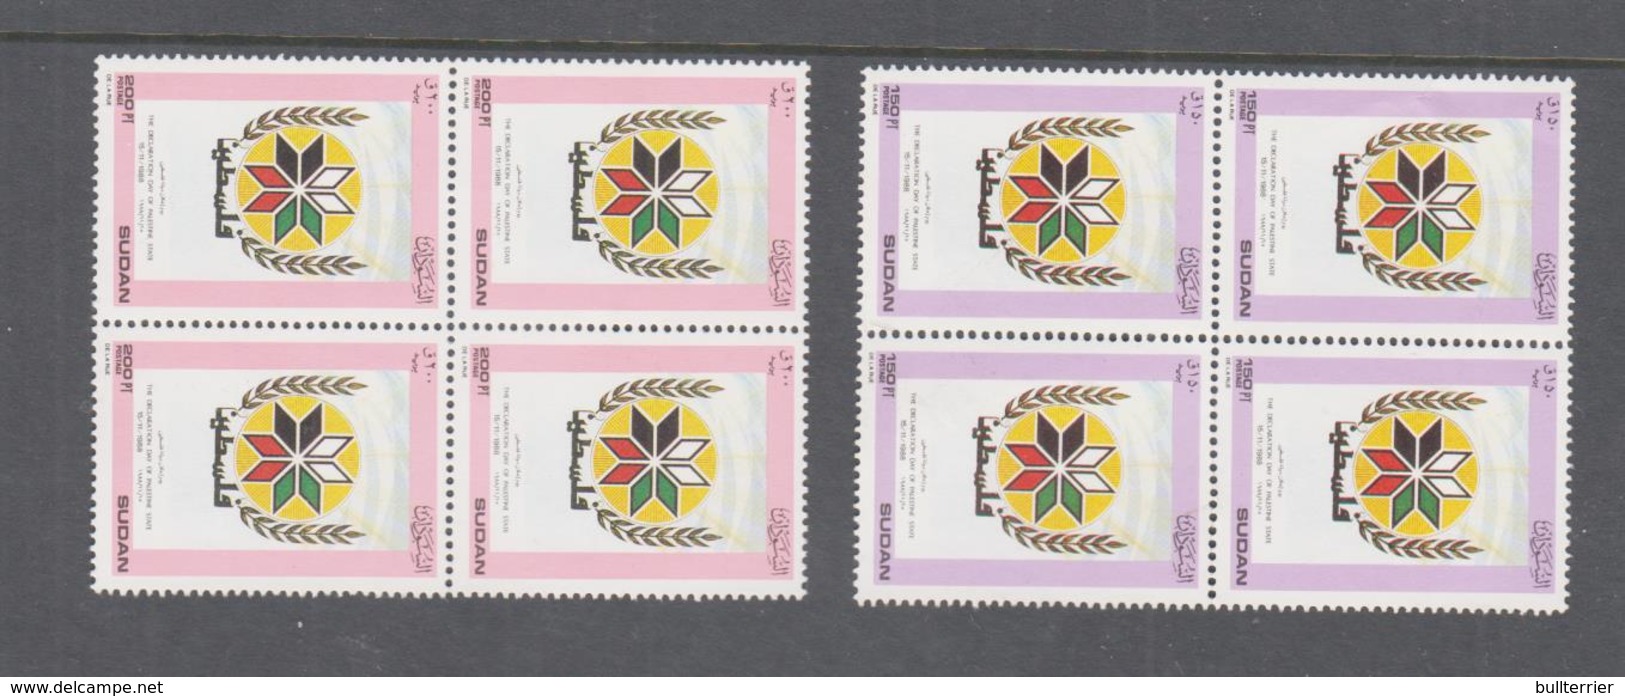 SUDAN -  1988 - PALESTINE FREEDOM SE OF 3 IN BLOCKS OF 4 MINT NEVER HINGED,SG CAT £24+ - Sudan (1954-...)